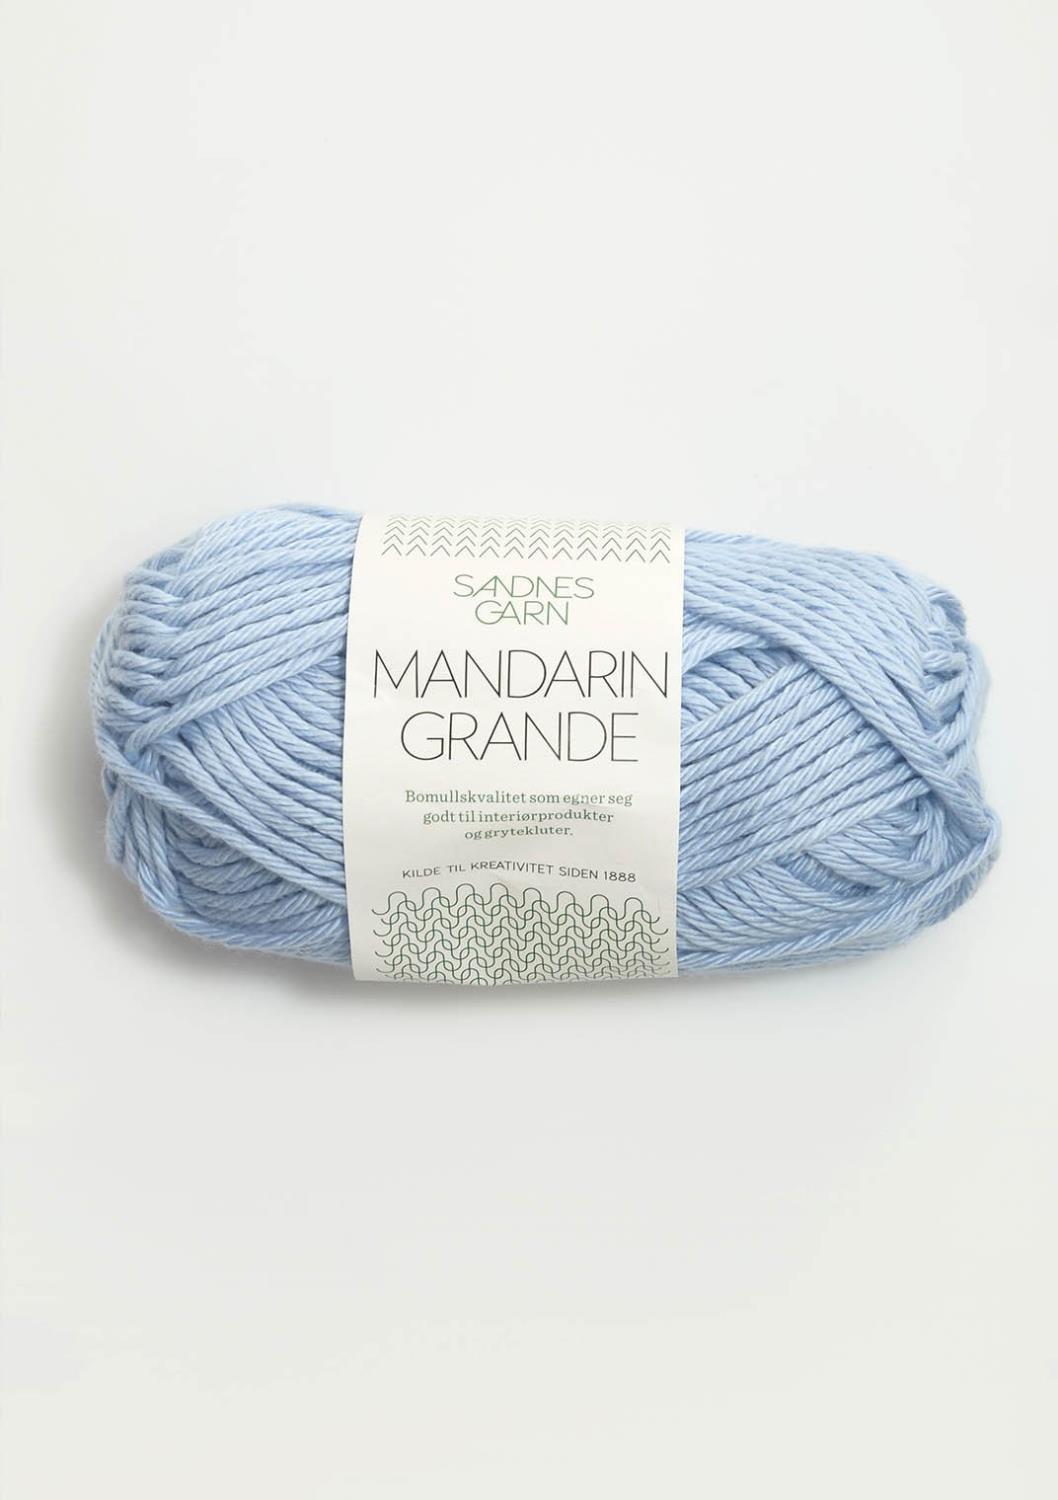 Mandarin Grande Sandnes 6003 - Lys Blå